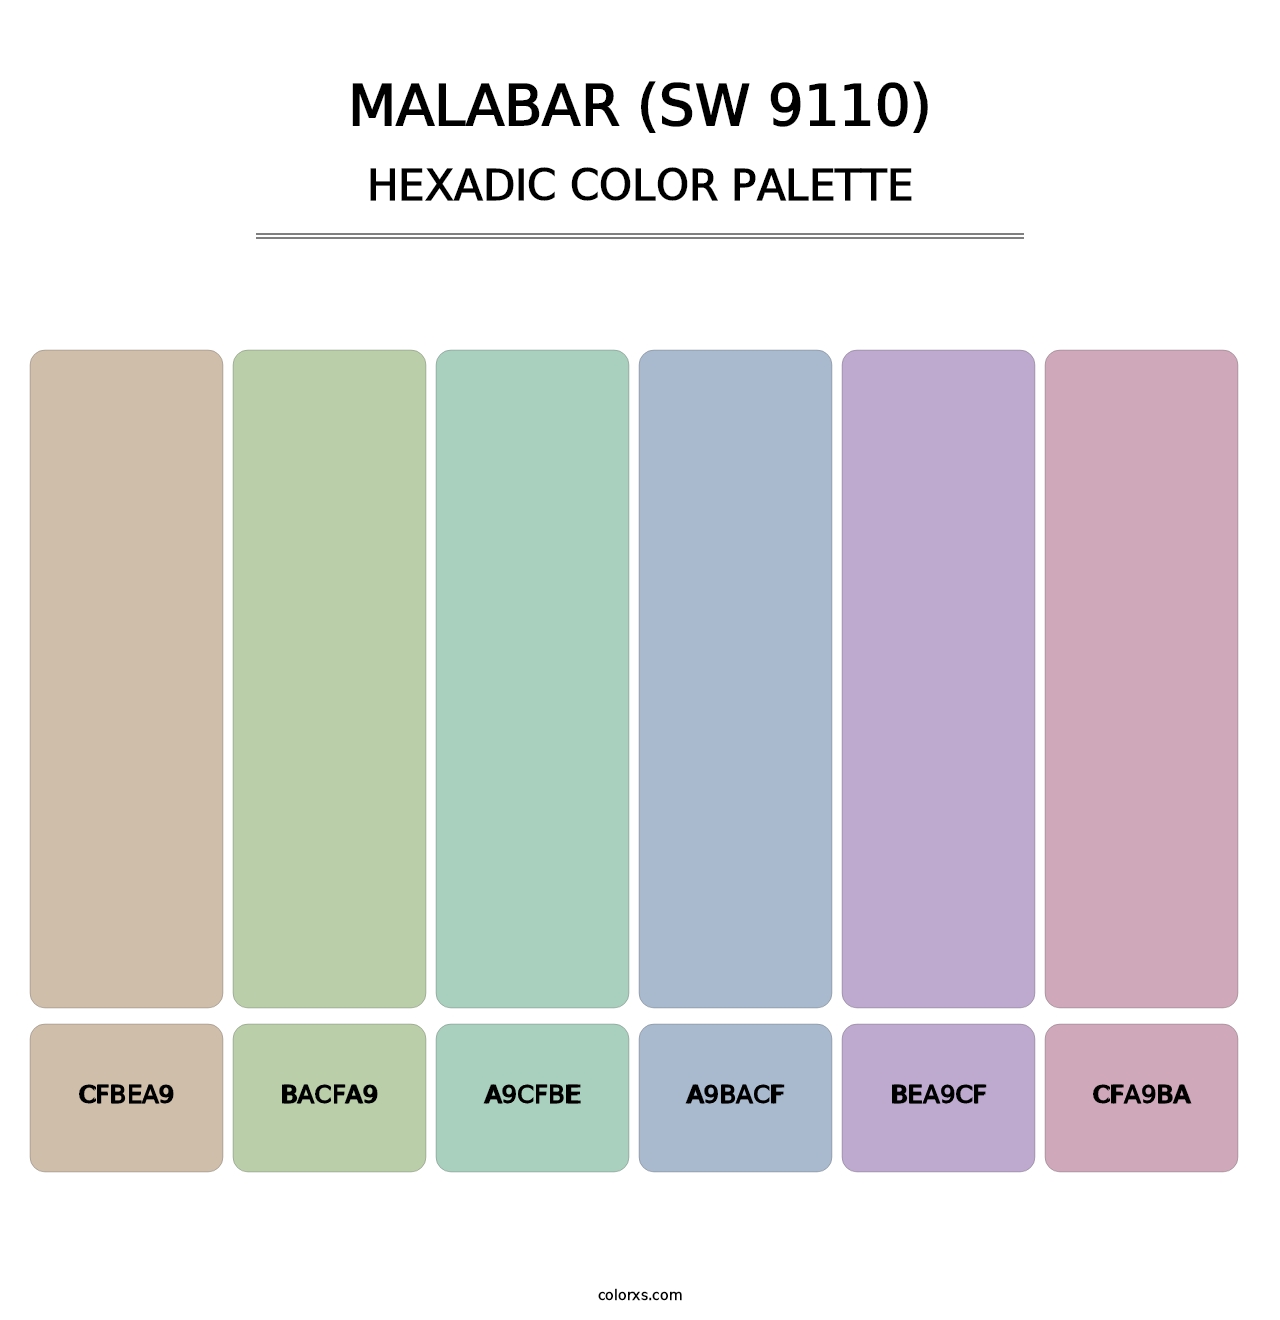 Malabar (SW 9110) - Hexadic Color Palette